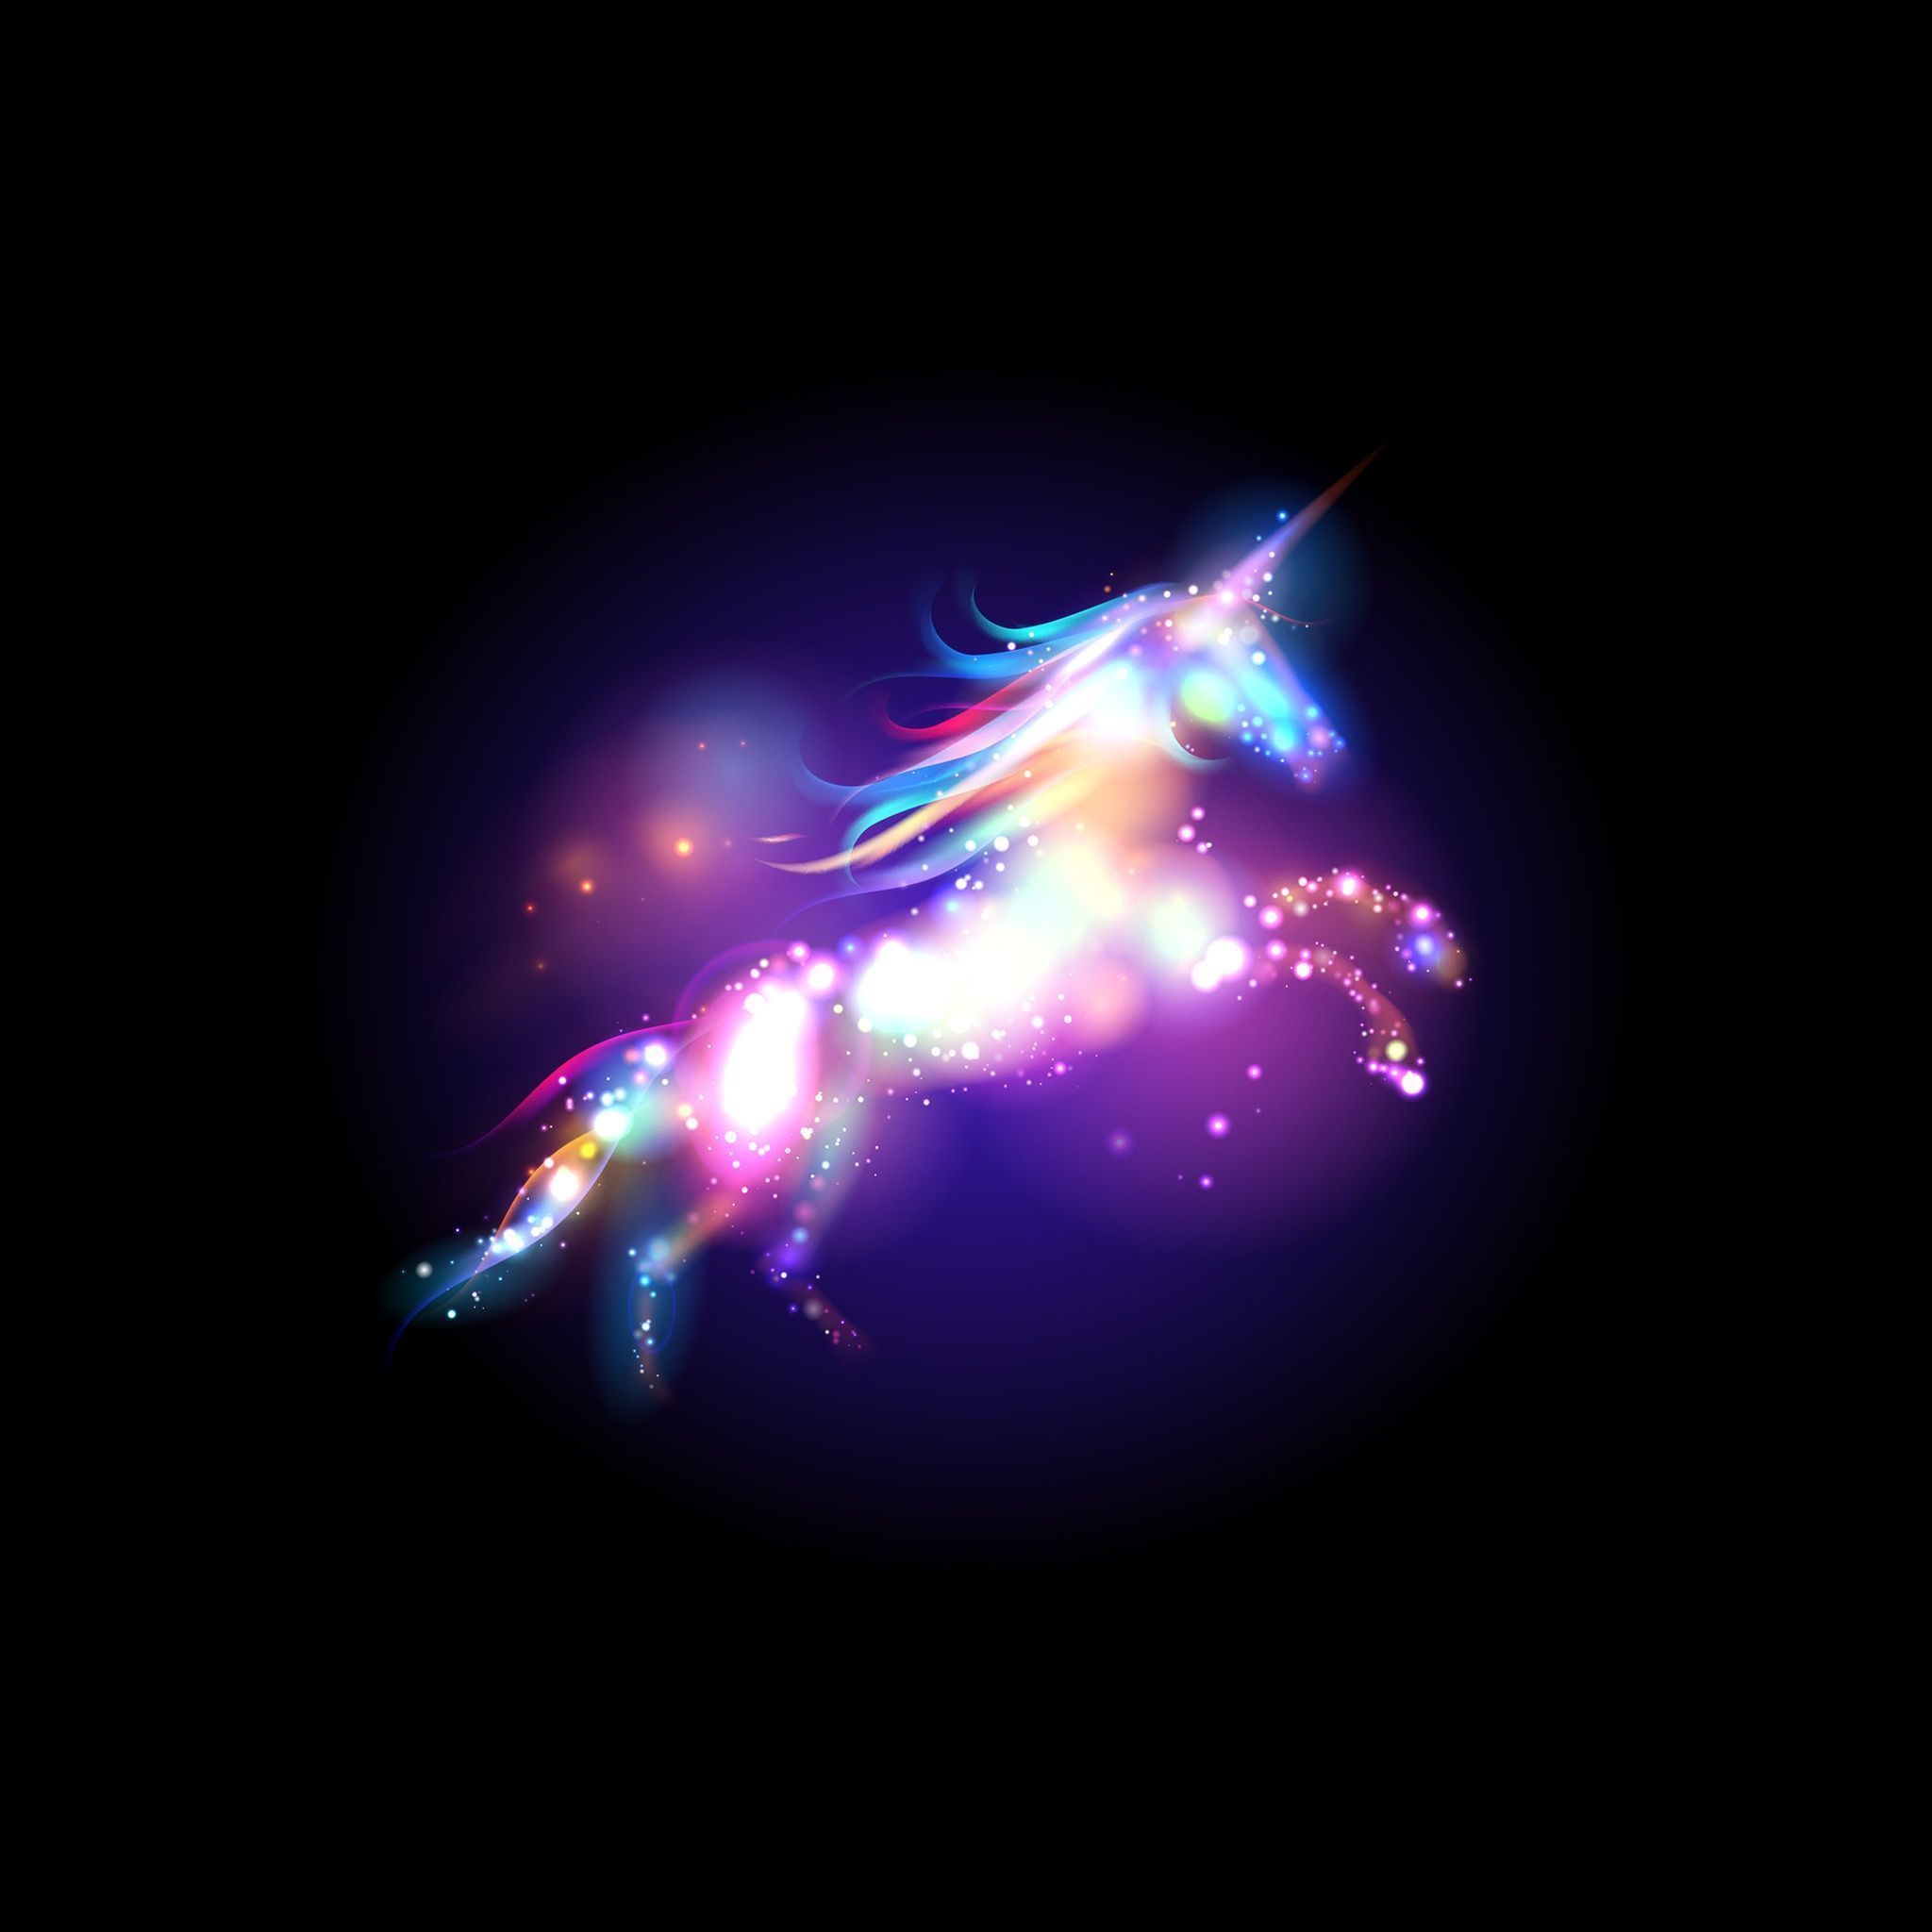 Unicorn Galaxy Wallpaper. WALPAPERS. Wallpaper. Unicorn wallpaper, Unicorn background, Holographic wallpaper